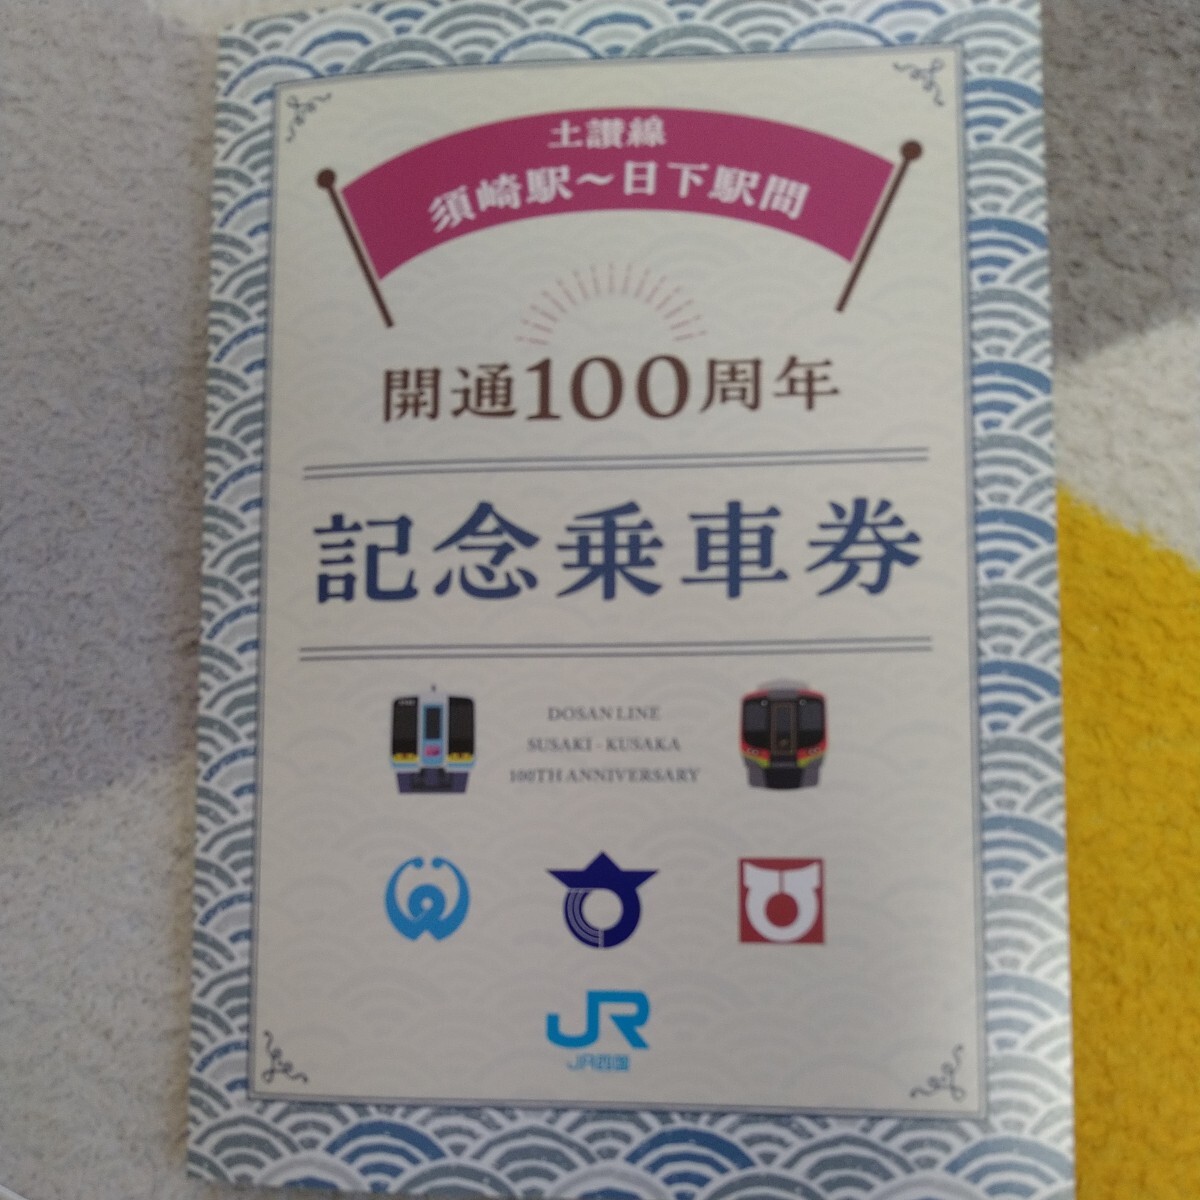 JR Shikoku earth . line opening 100 anniversary commemoration passenger ticket 